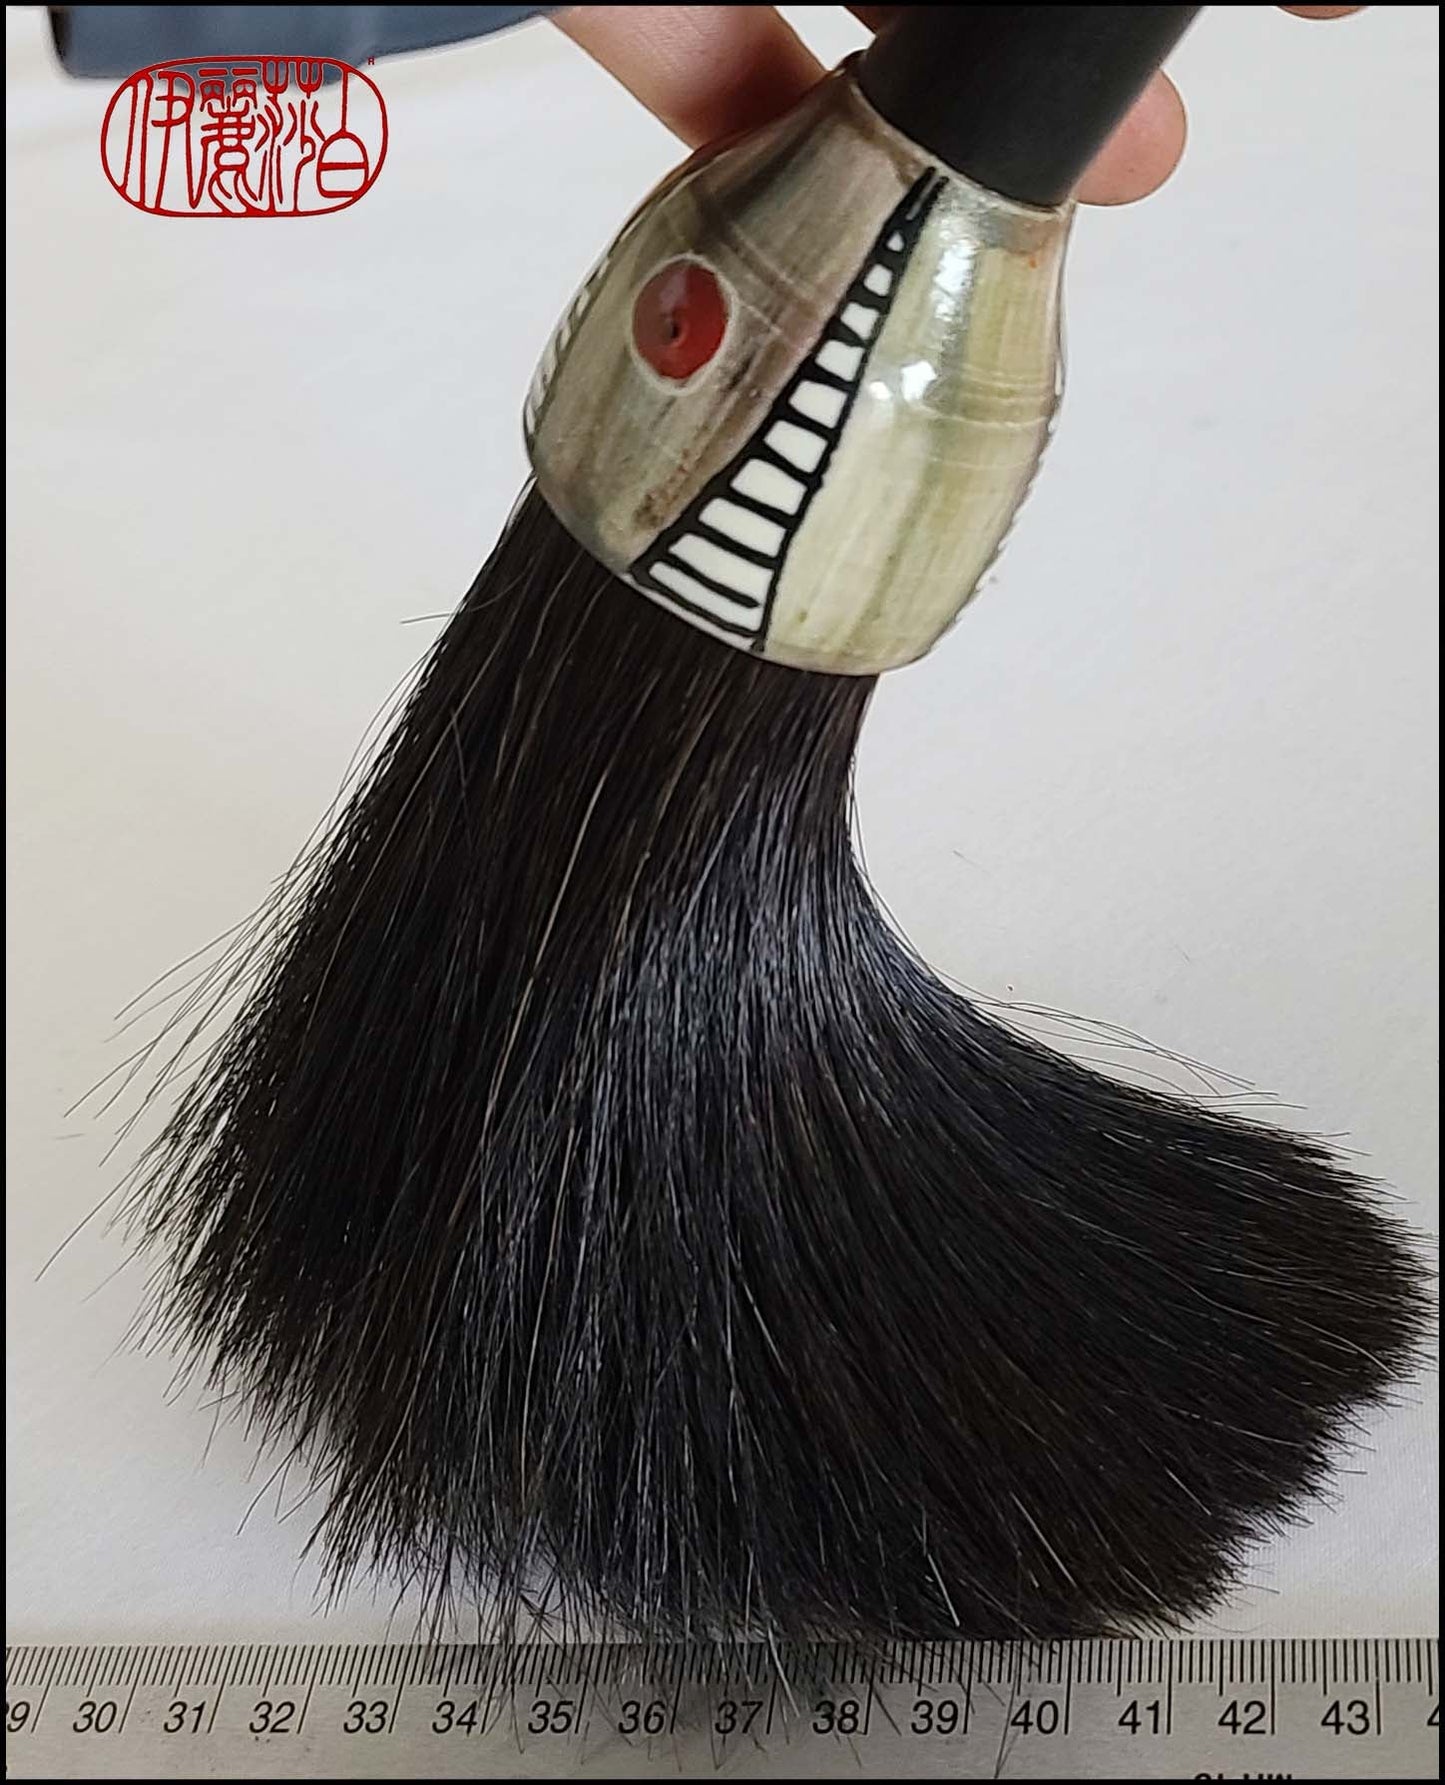 Black Horsehair Sumi-e Paint Brush with Ceramic Ferrule #115 Art Supplies Elizabeth Schowachert Art